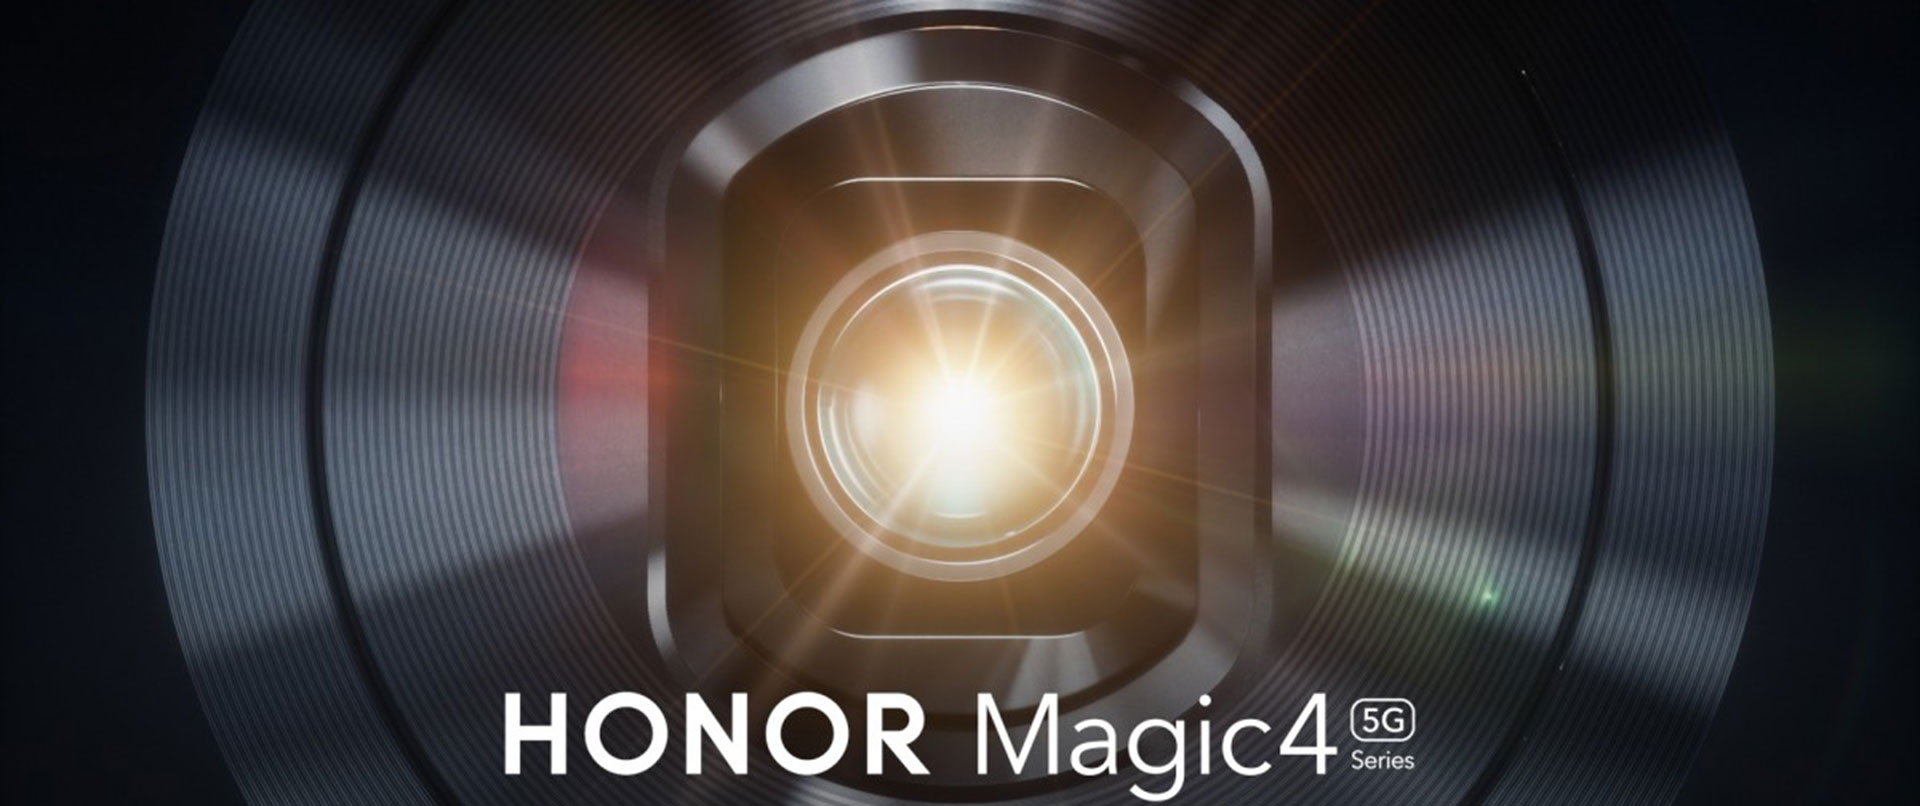 Honor Magic Family 4